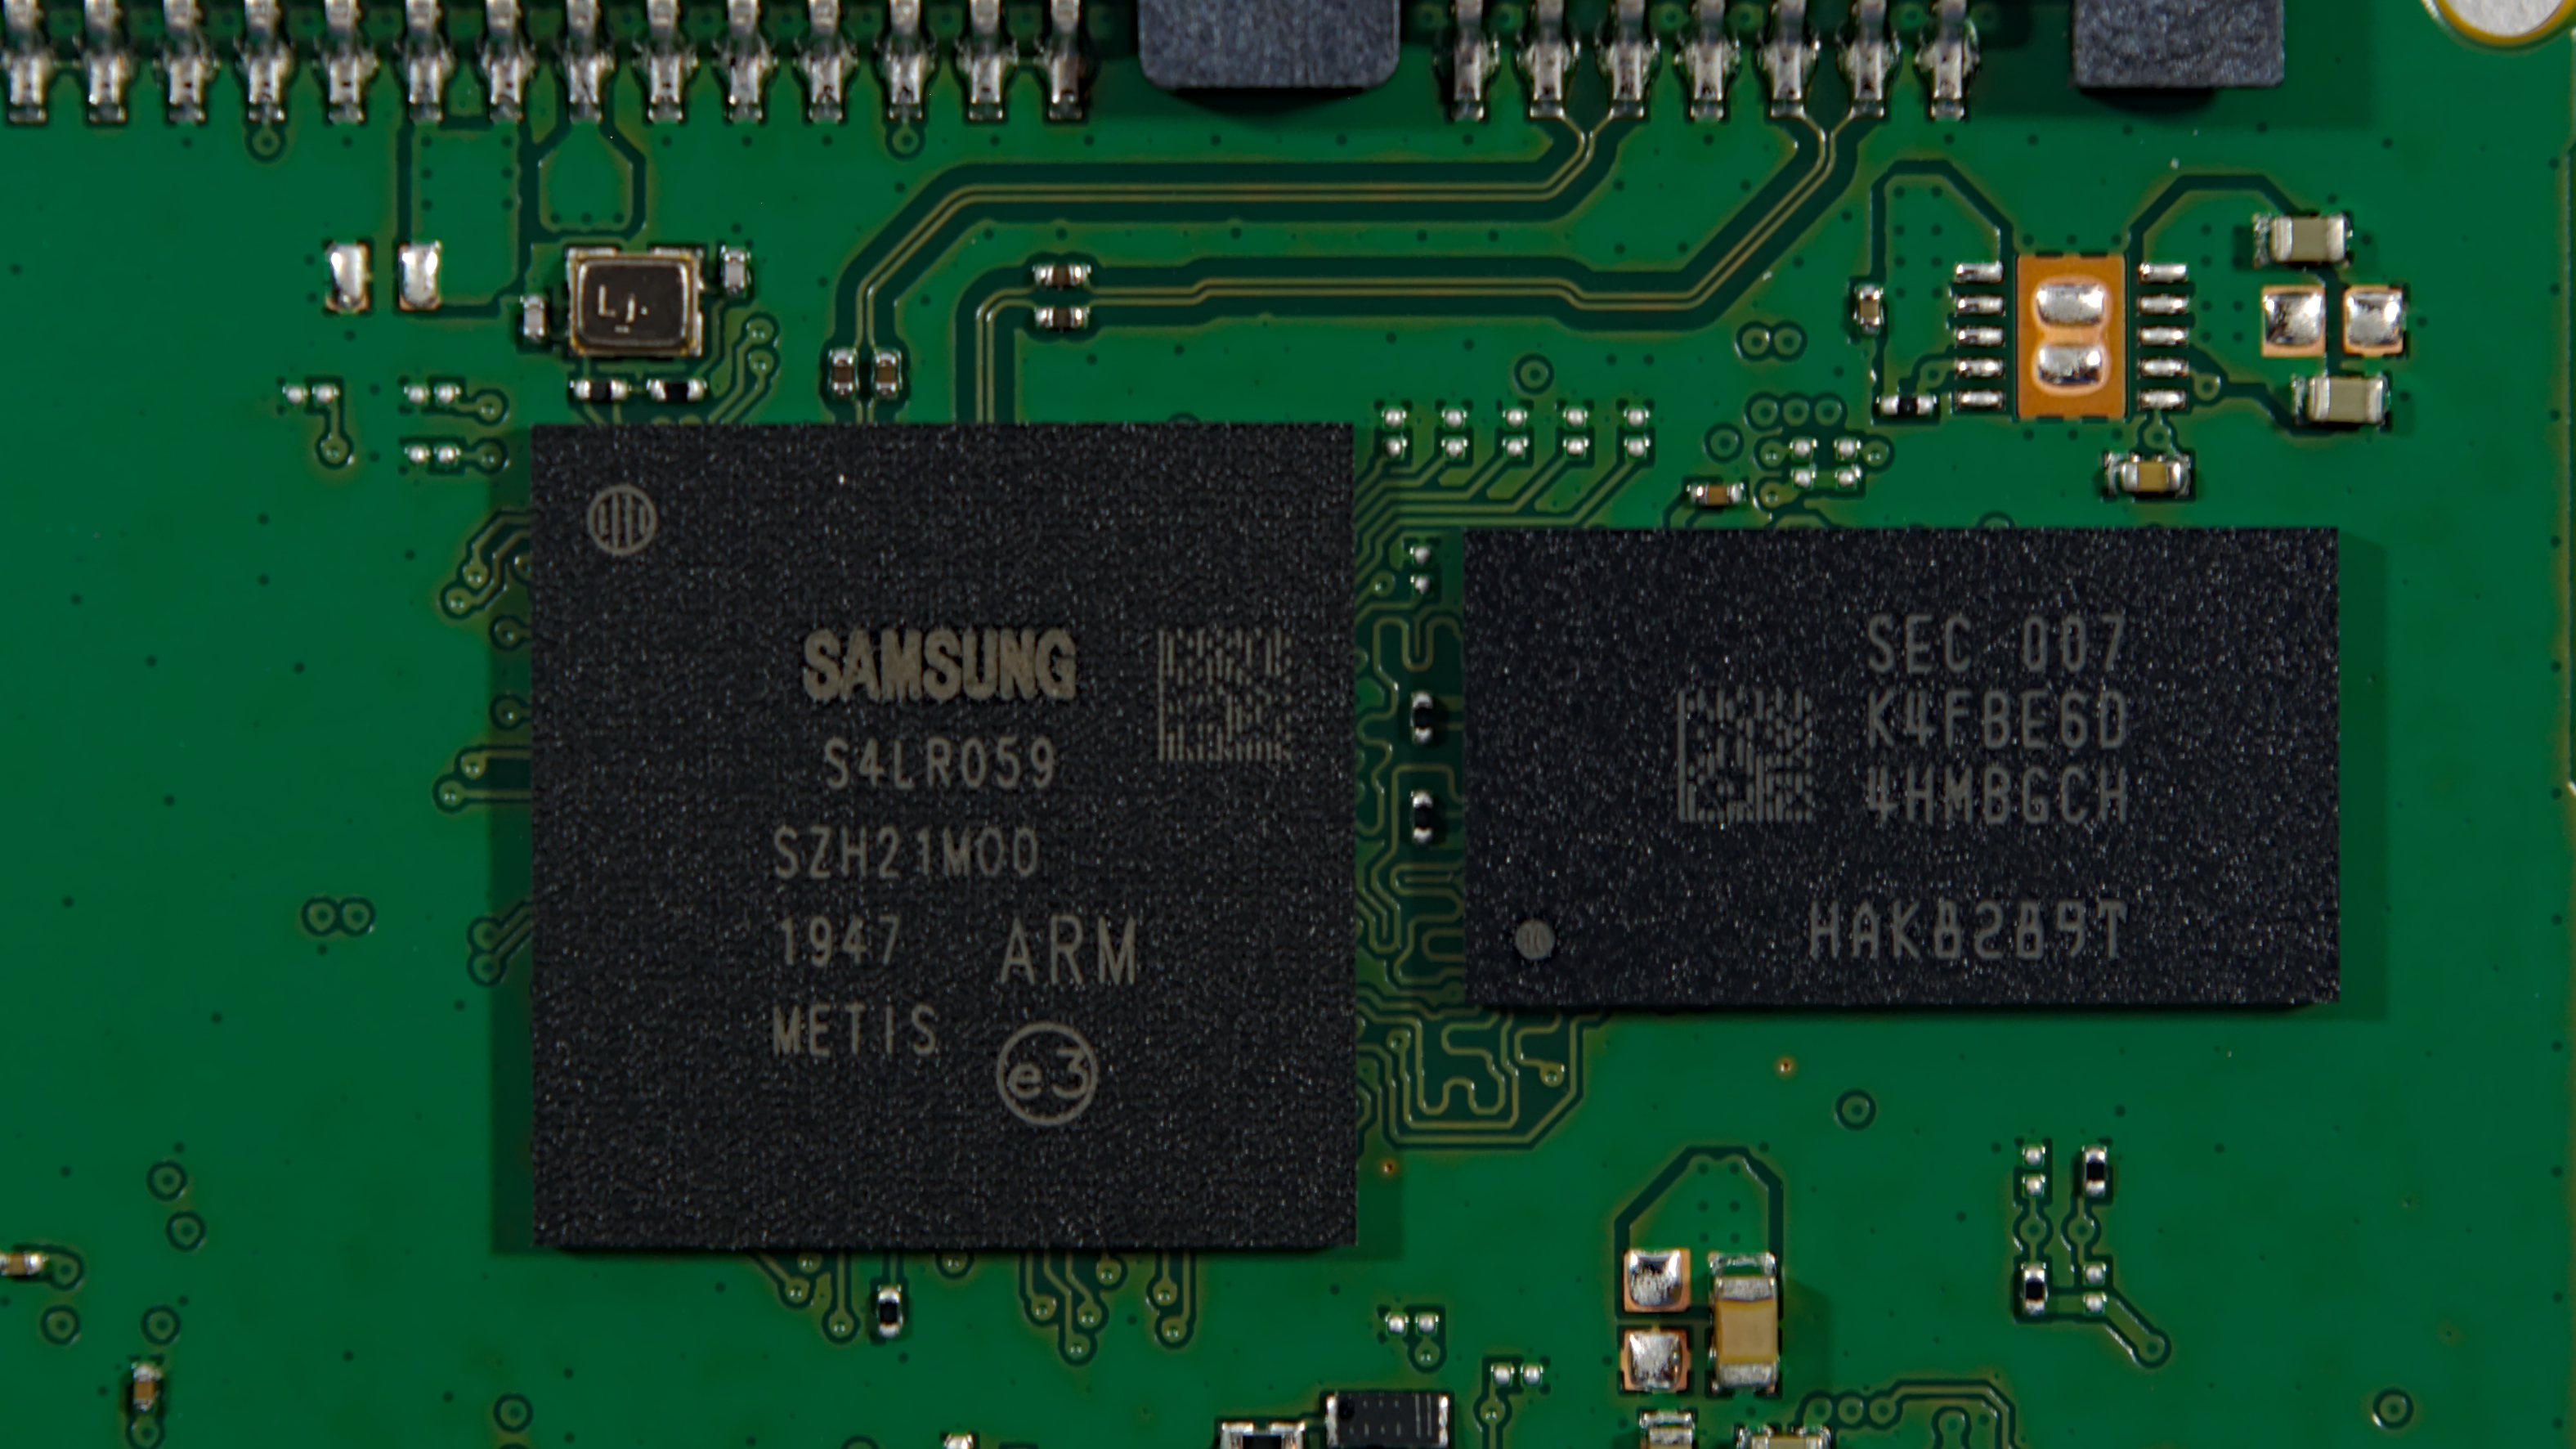 SSD Samsung 870 EVO SATA 2,5 - 2To